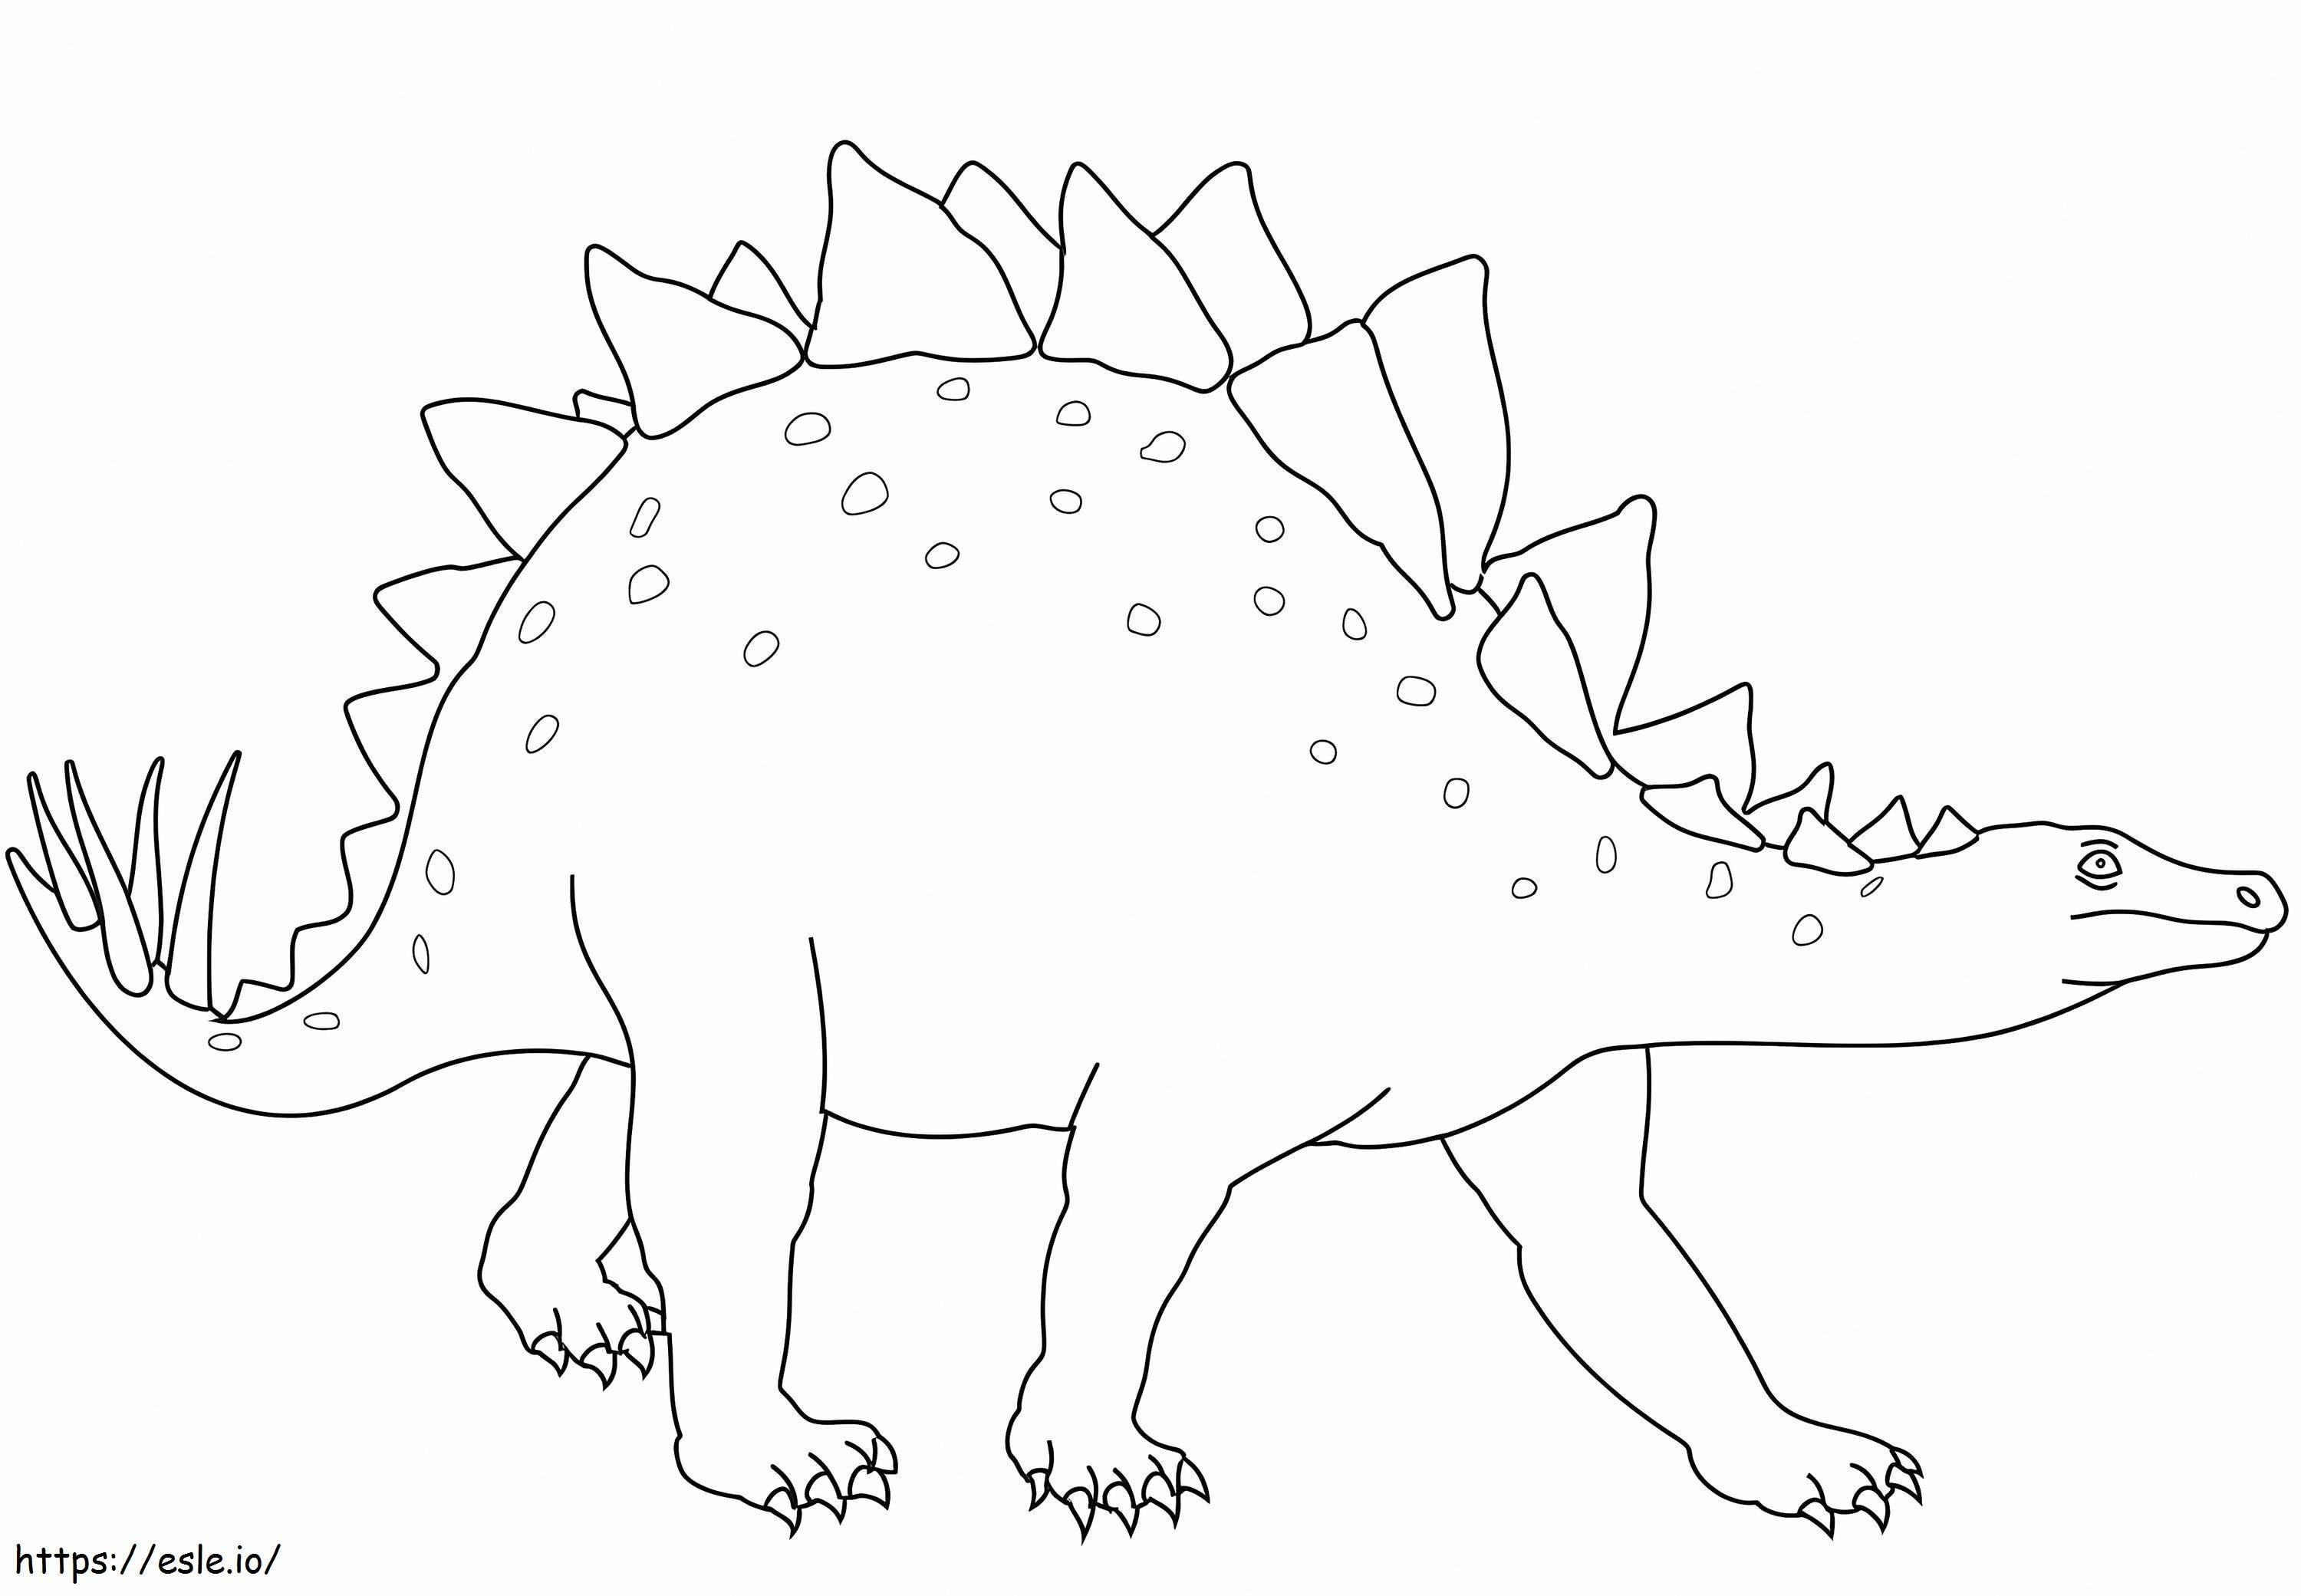 Stegosaurus-Dinosaurier ausmalbilder